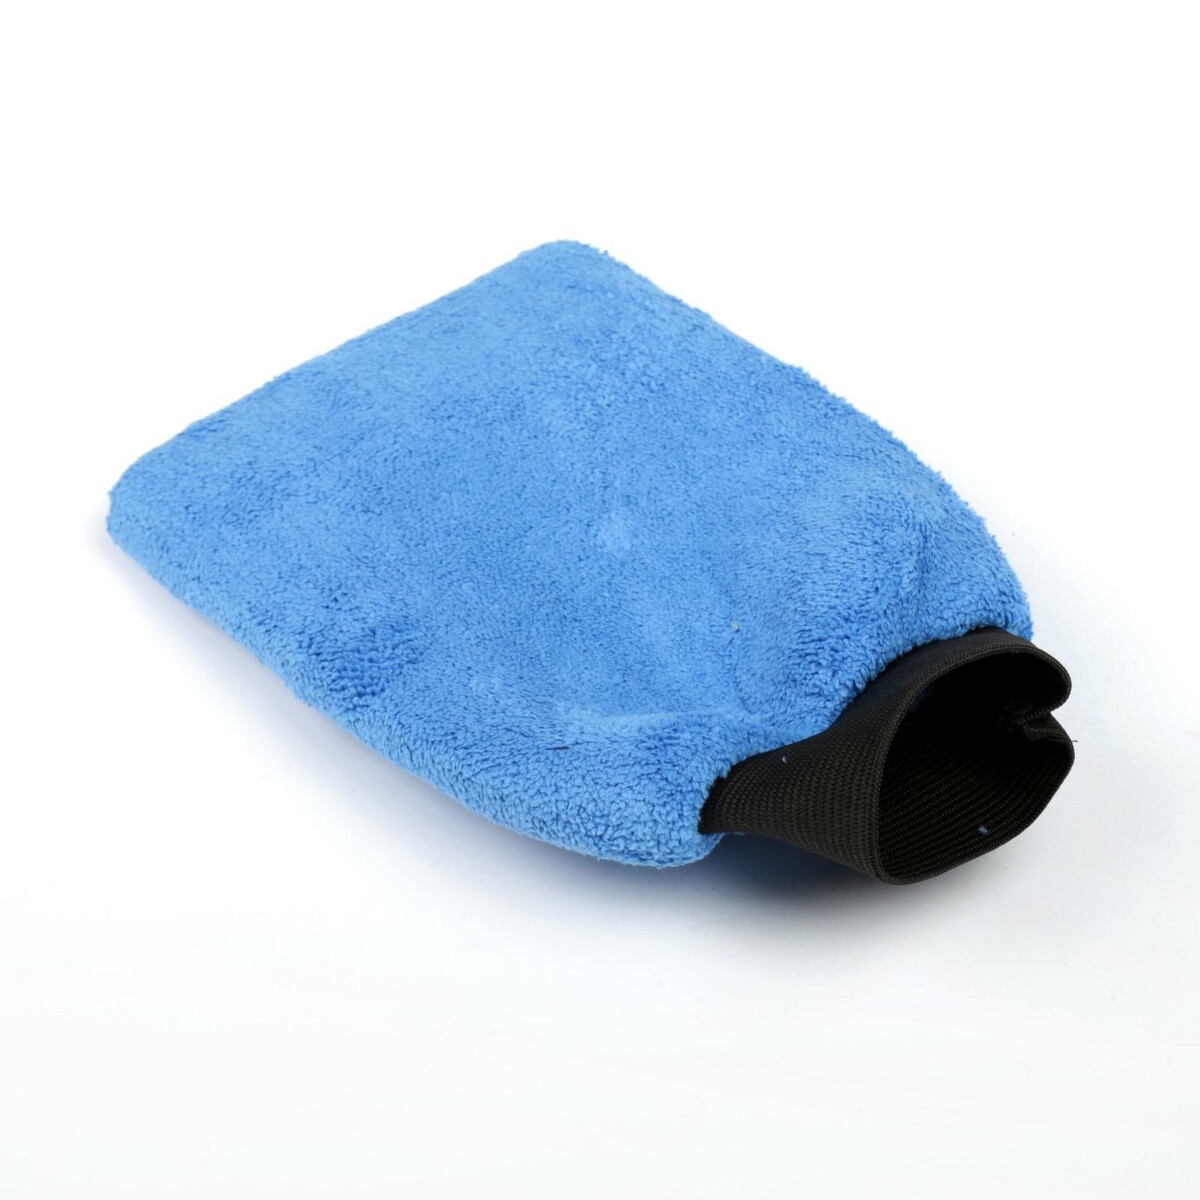 фото Варежка для уборки авто, 24×16 см, синяя no brand